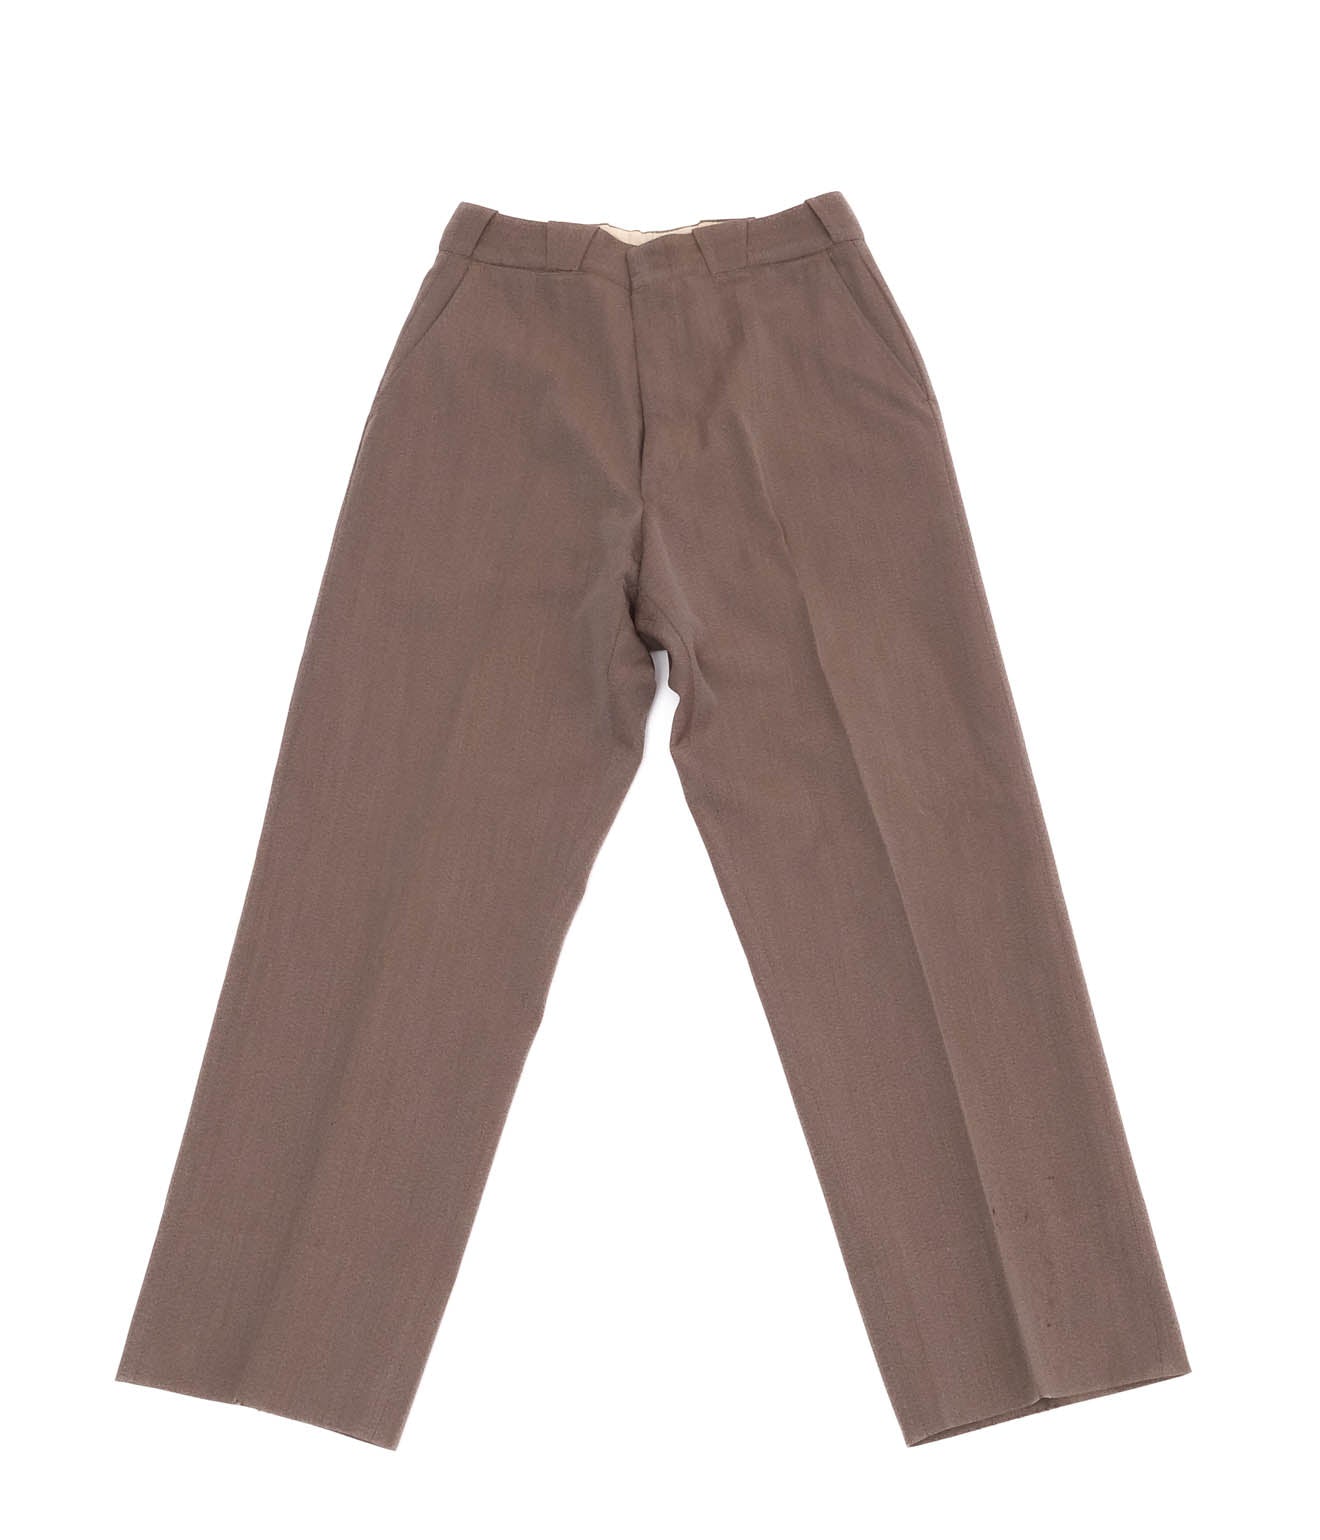 1960's Western Pants (Beige)